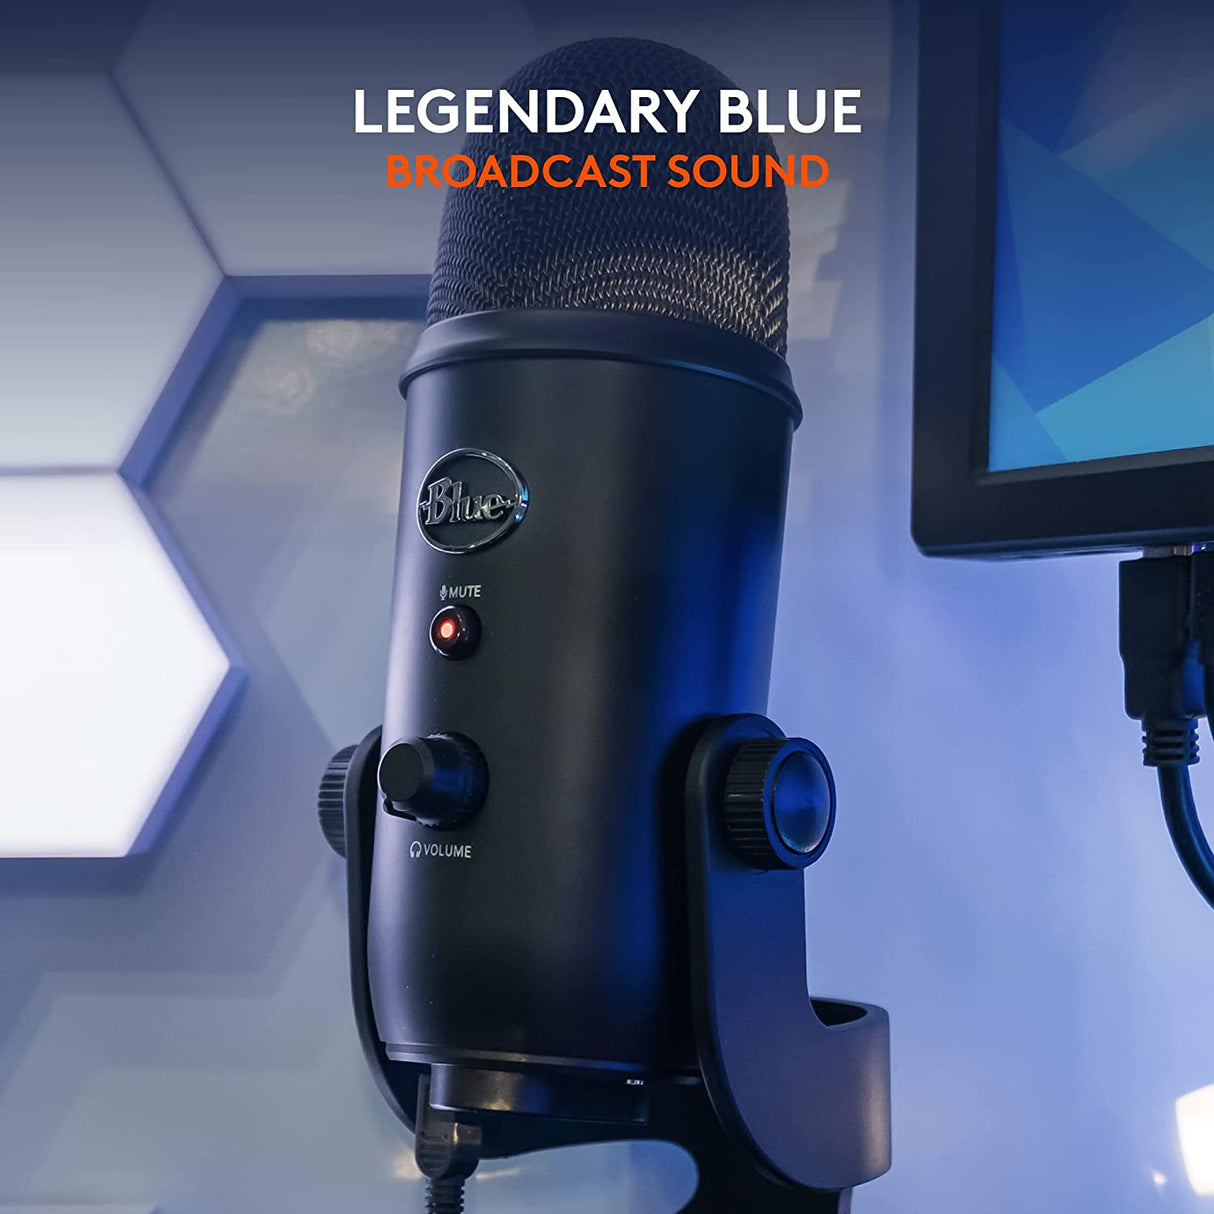 Blue Yeti Usb Microphone Pc, Logitech Blue Microphone, Logitech Blue Yeti